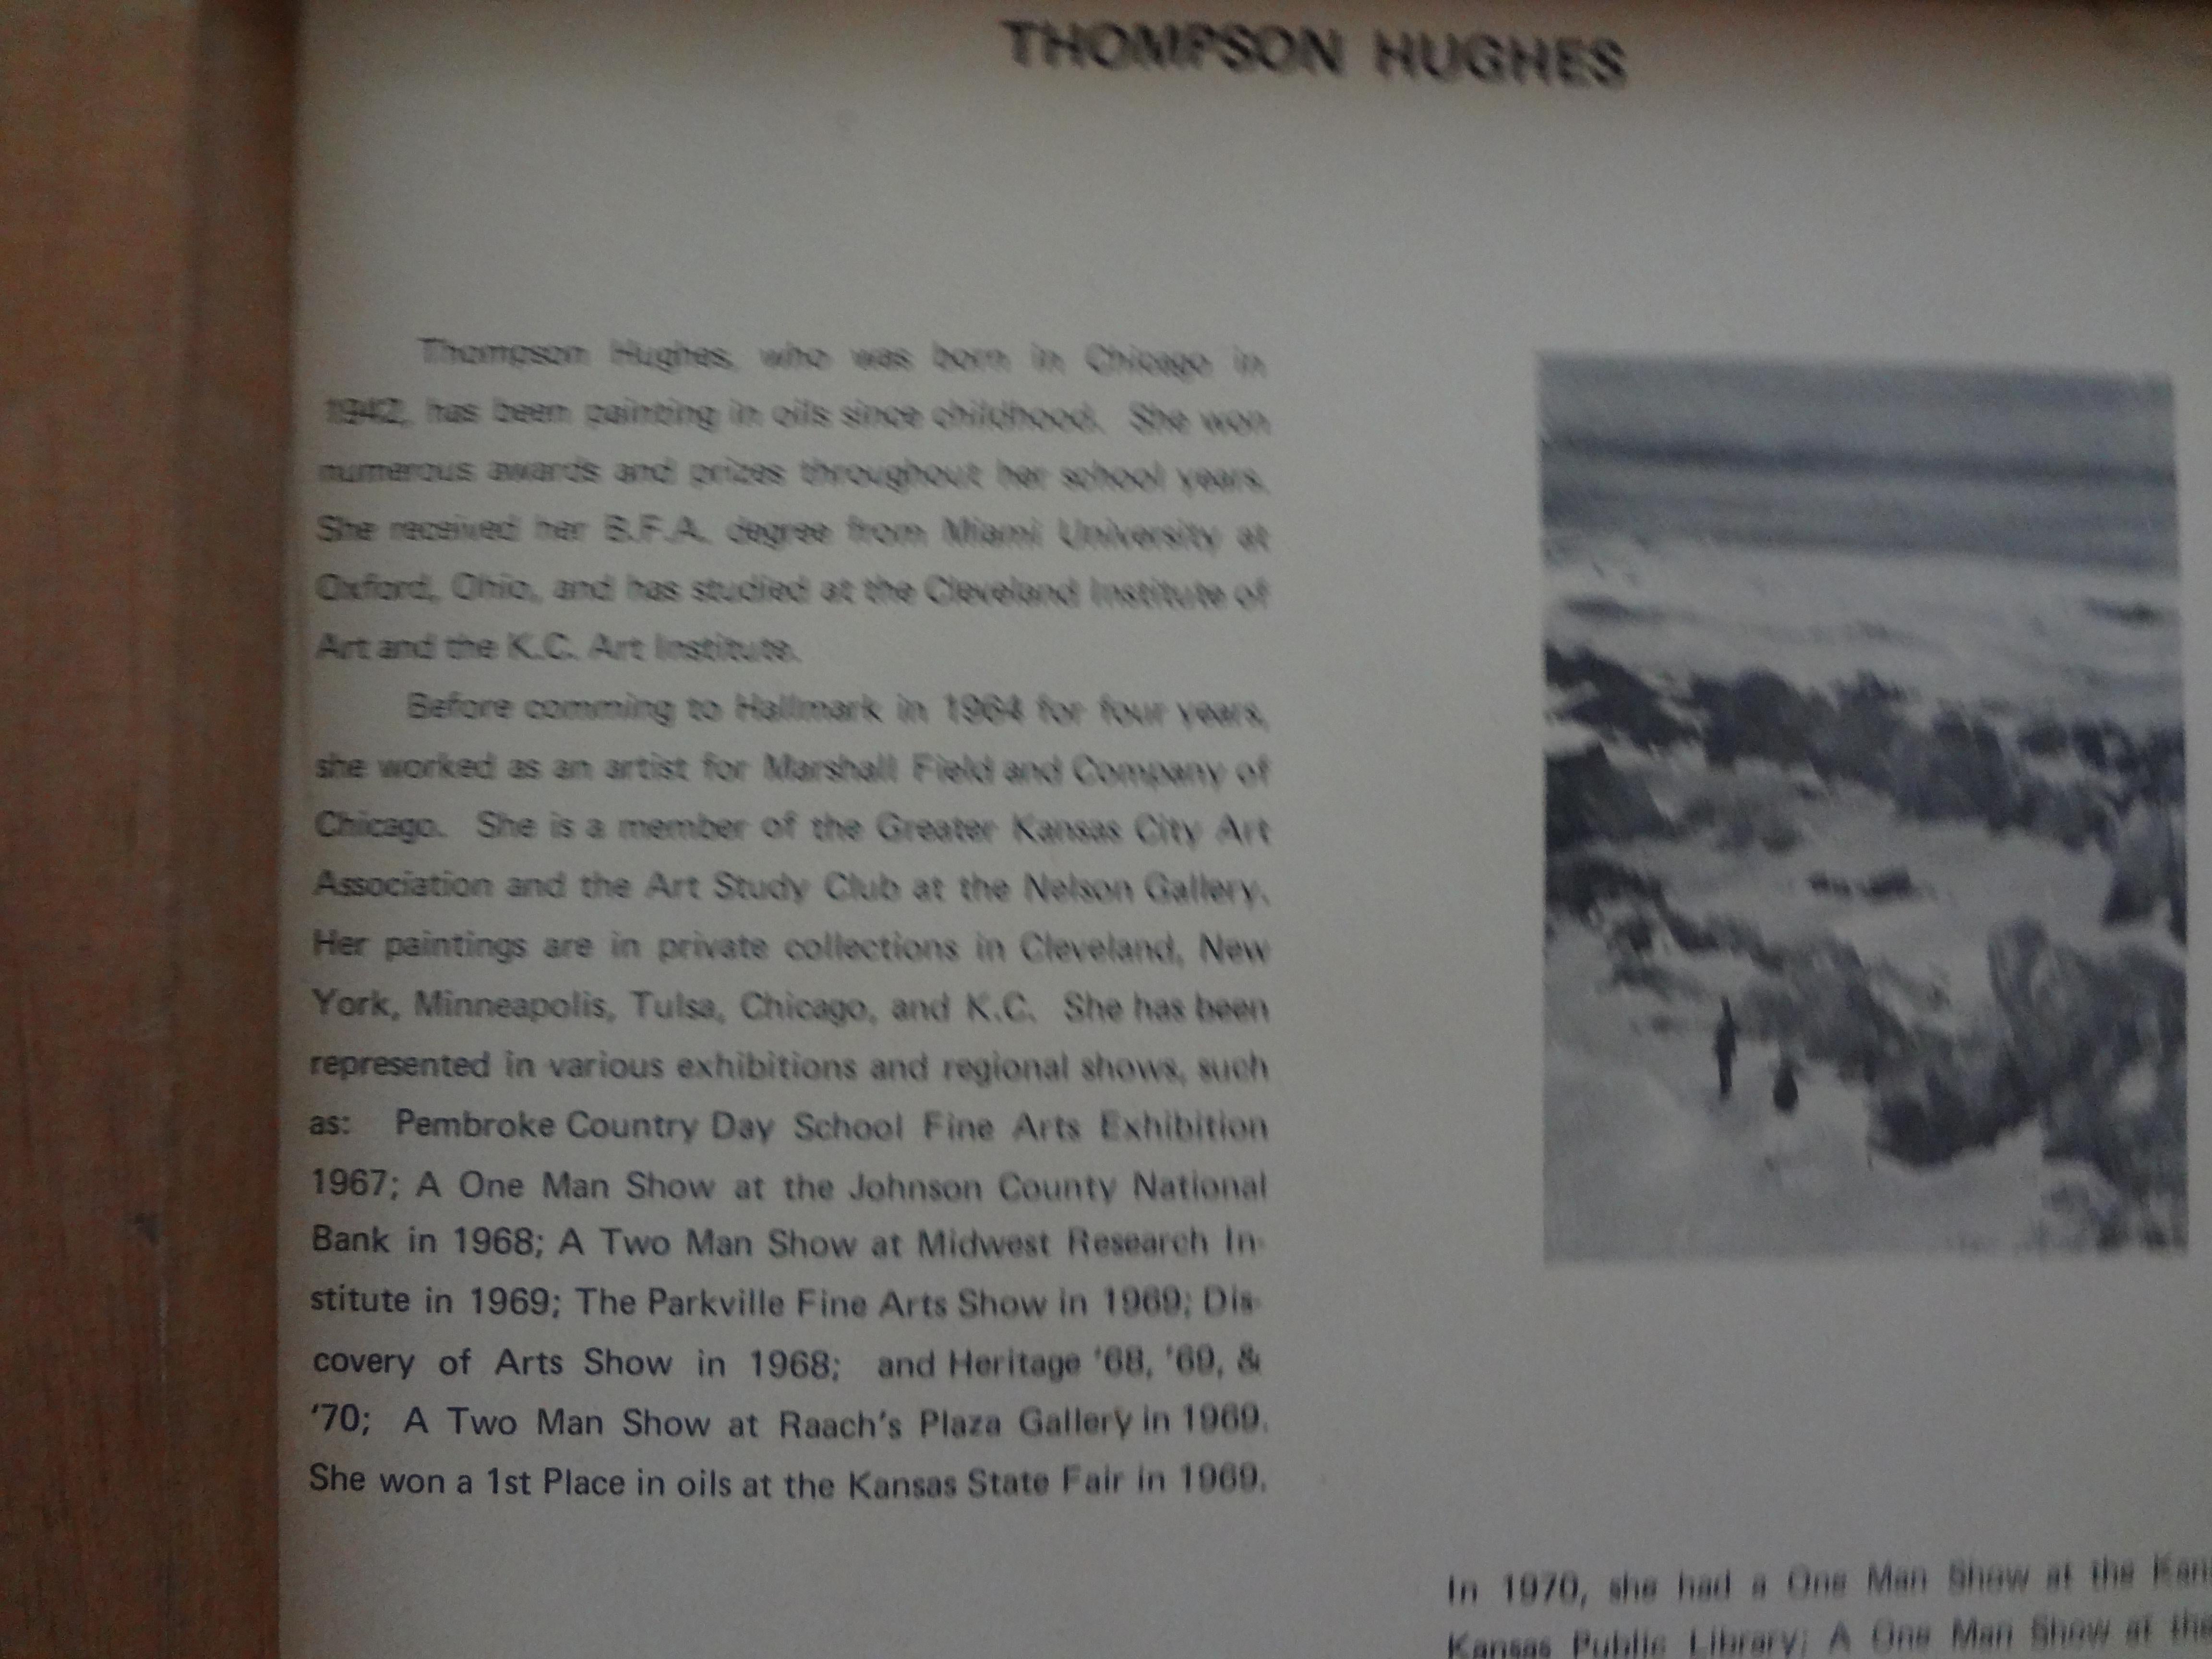 Großes Öl auf Leinwand Signiert Thompson Hughes:: 1970 im Angebot 5